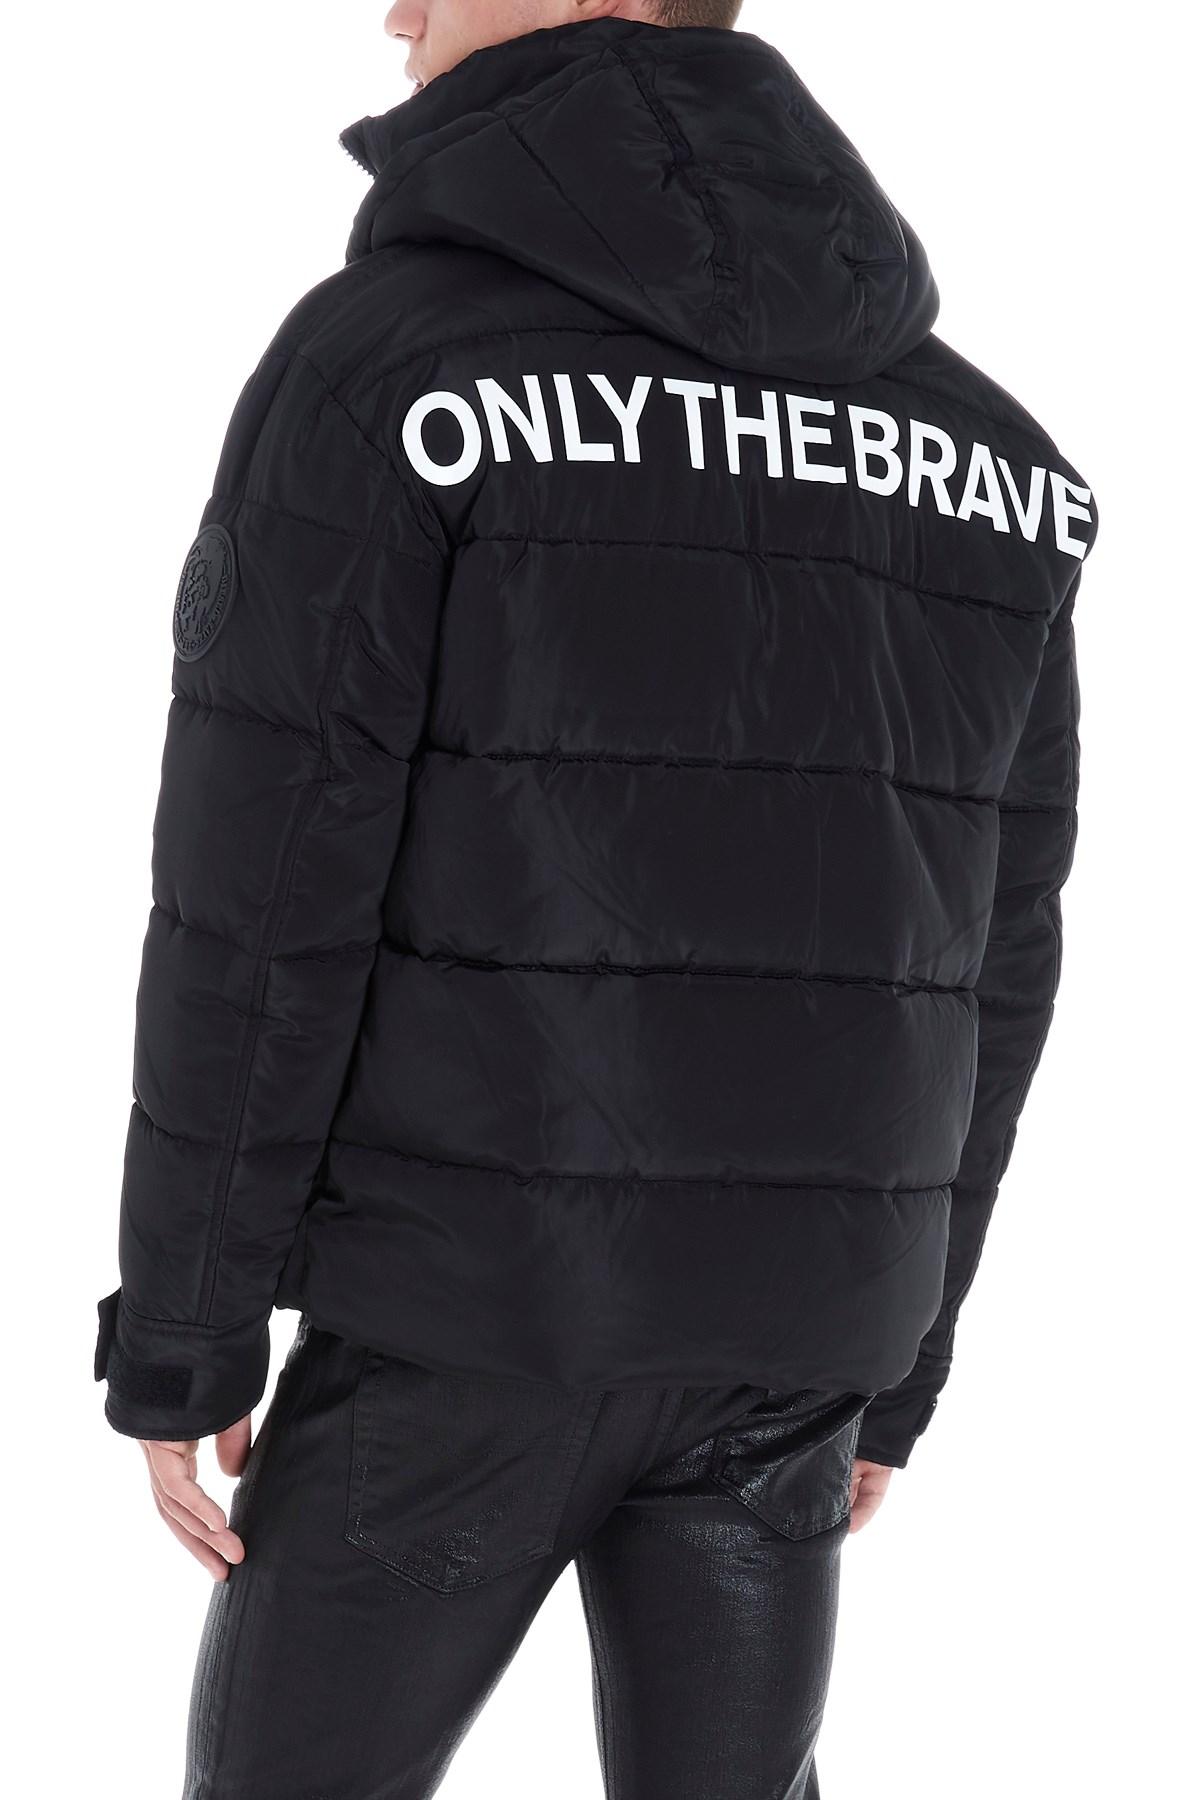 DIESEL 'only The Brave' Jacket for Men Lyst